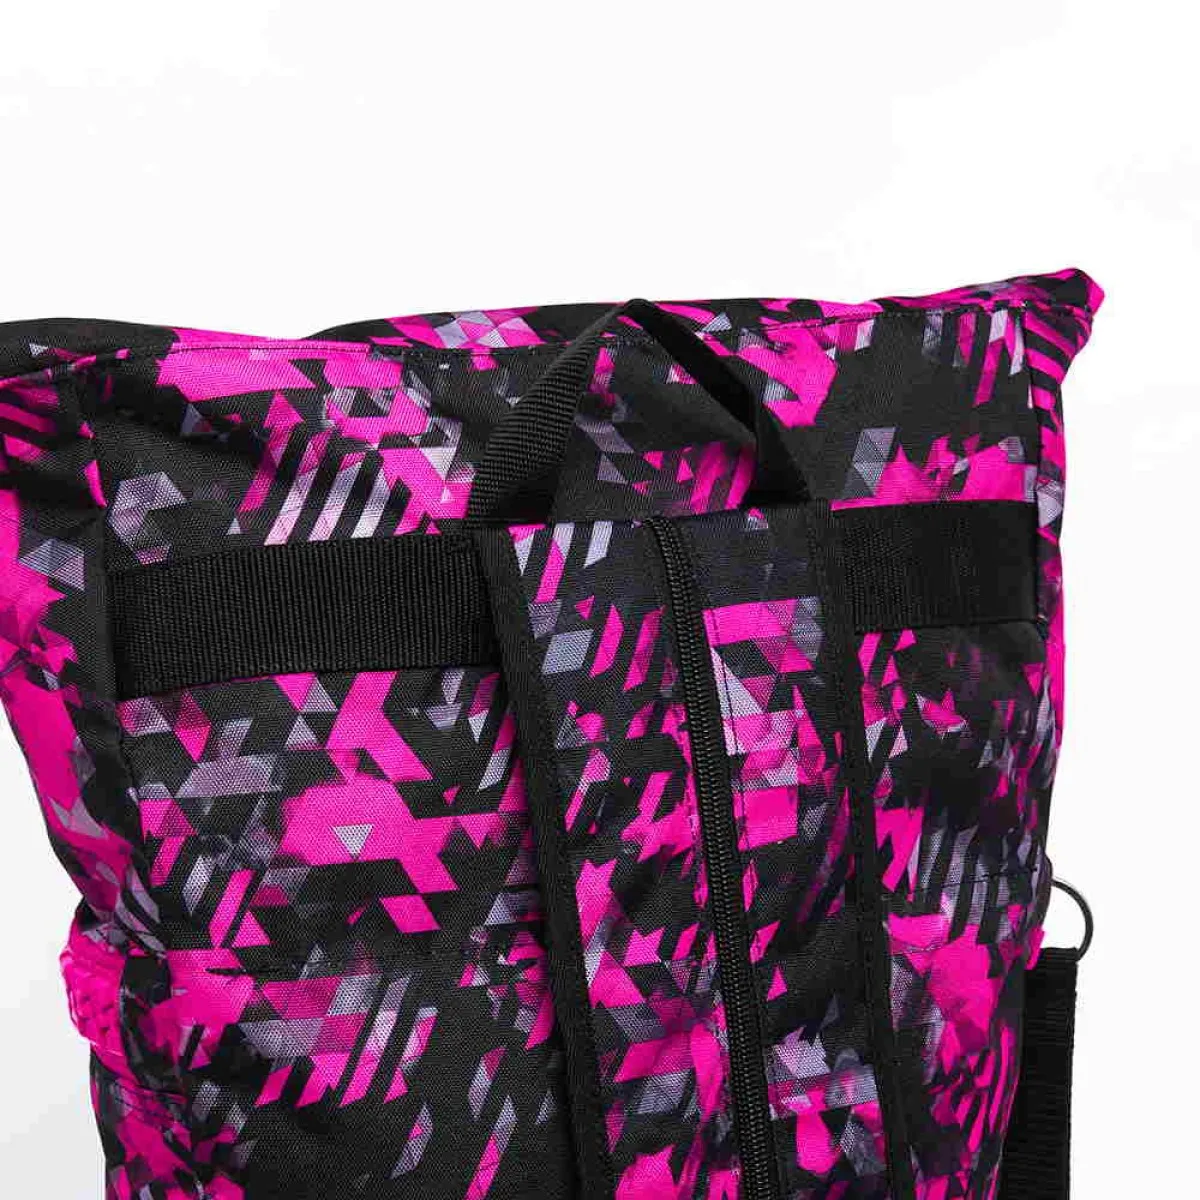 Adidas Big Zip sports backpack